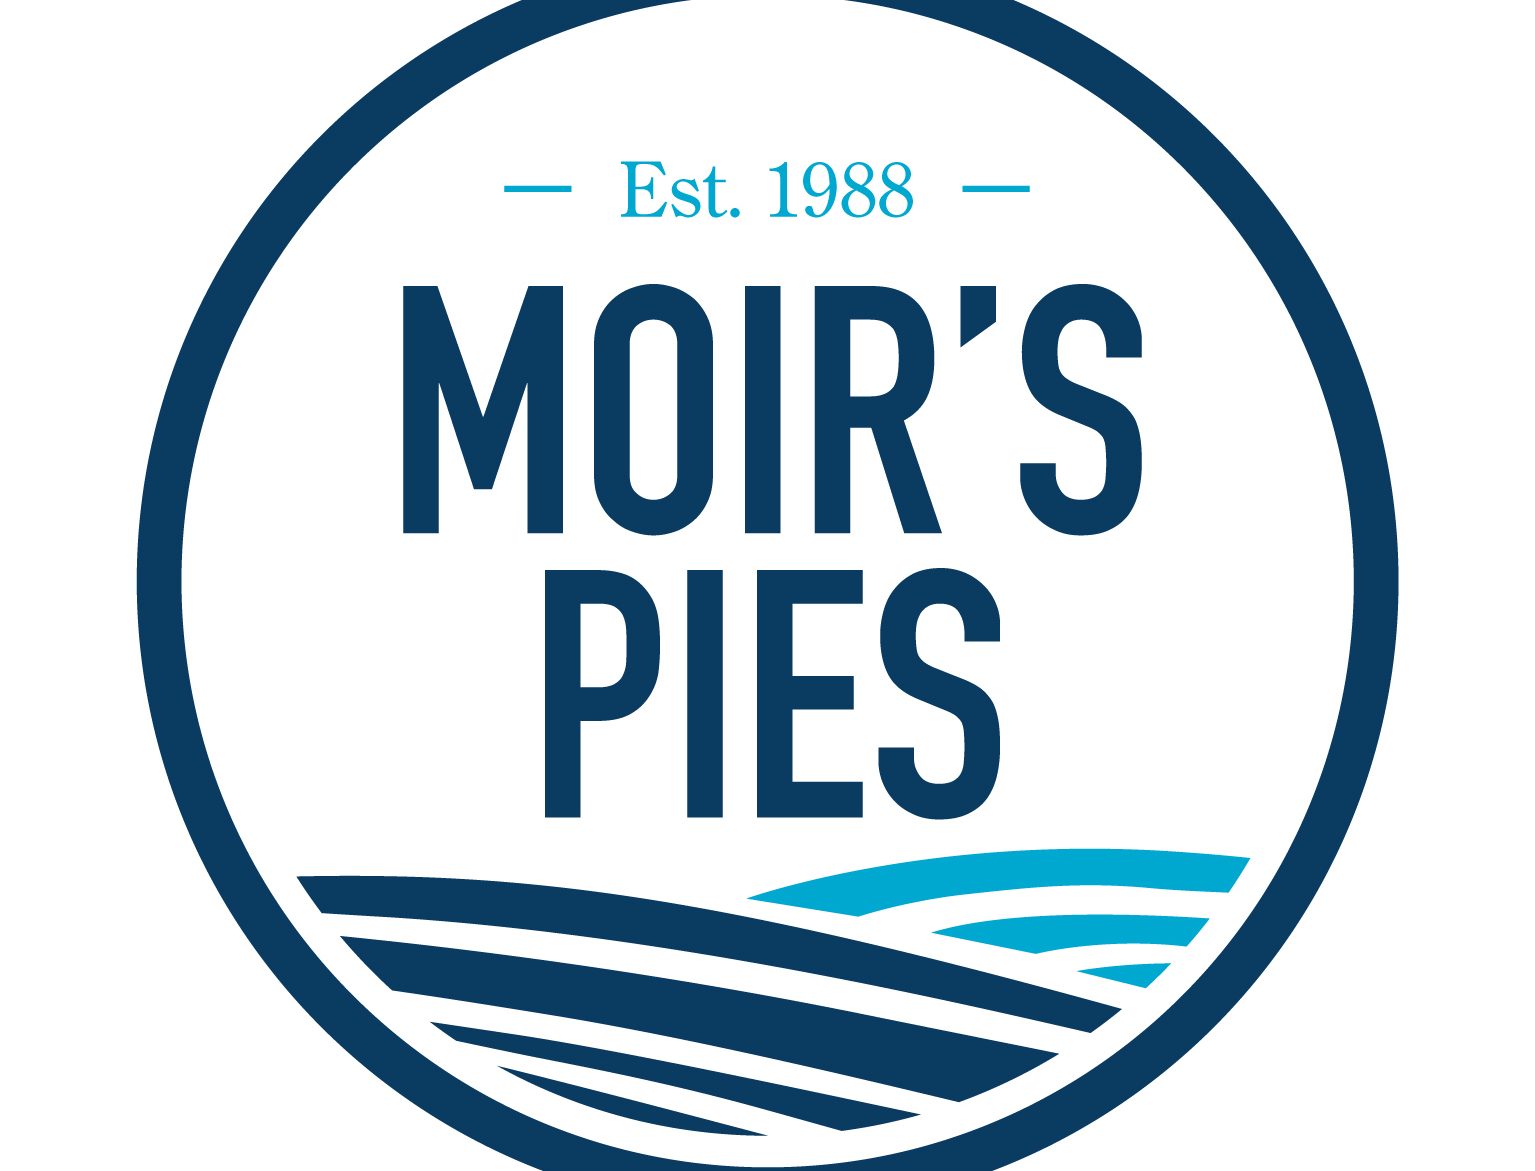 Moirs Pies - Clockstudio